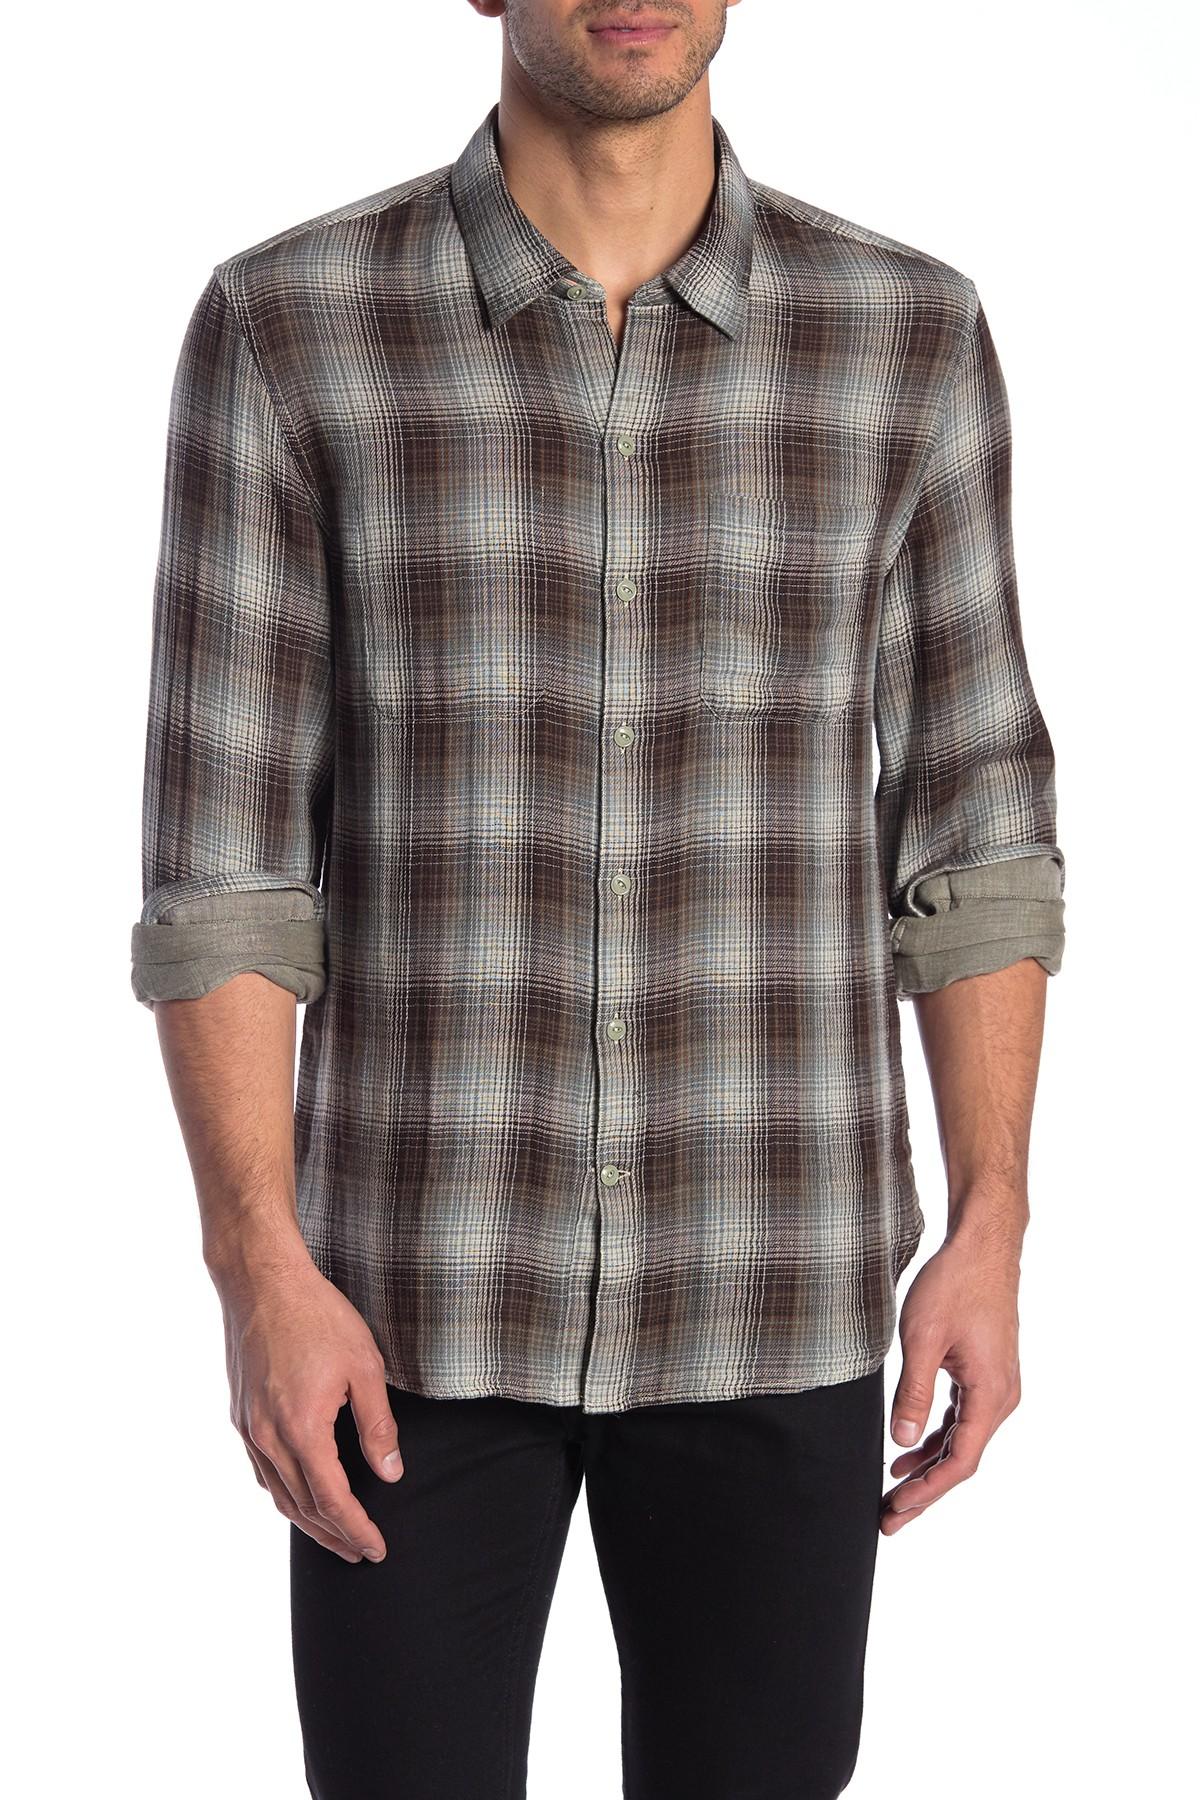 John Varvatos Cotton Plaid Reversible Trim Fit Shirt in Chestnut (Brown ...